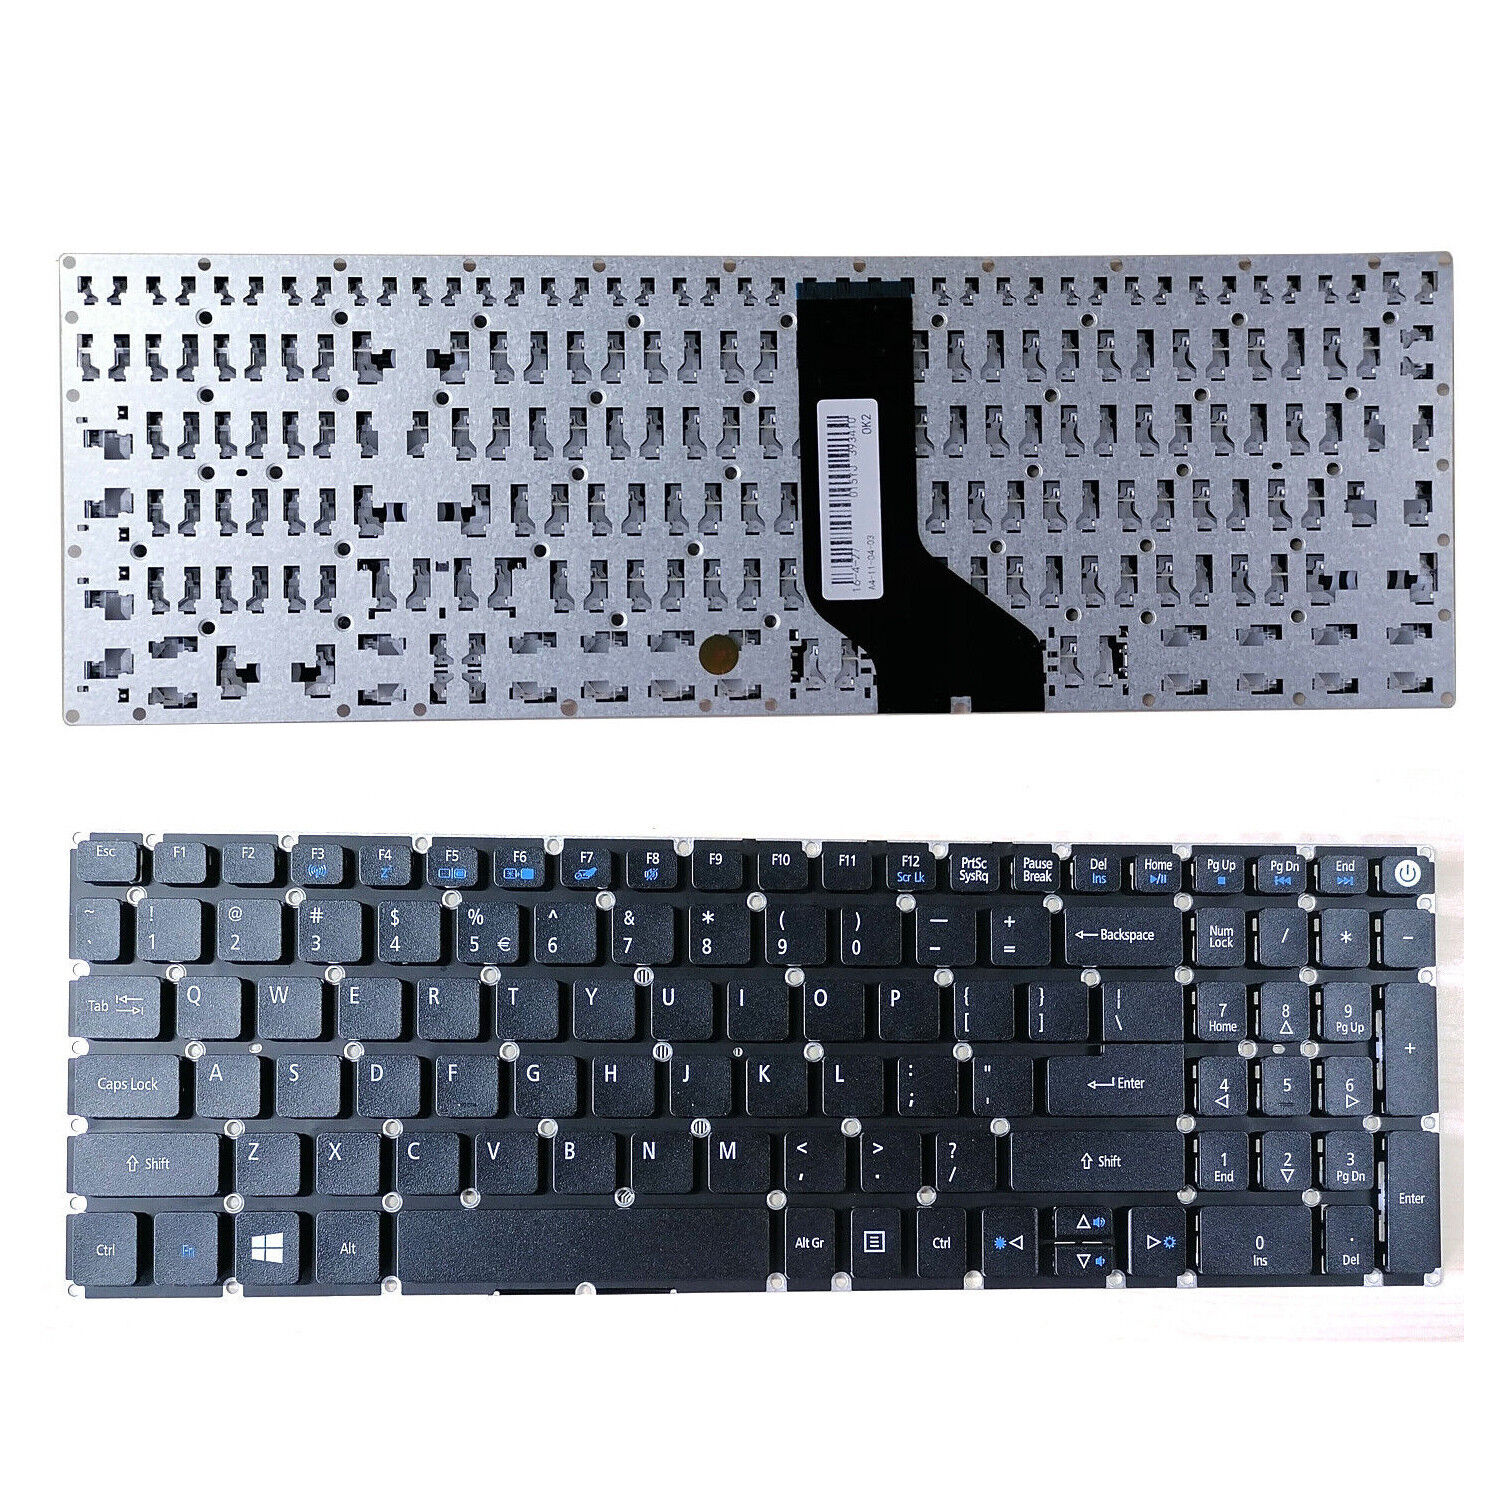 US English Laptop Keyboard for Acer Aspire N15Q1 N15Q2 N17Q1 N17Q2 N17Q3 N17C4